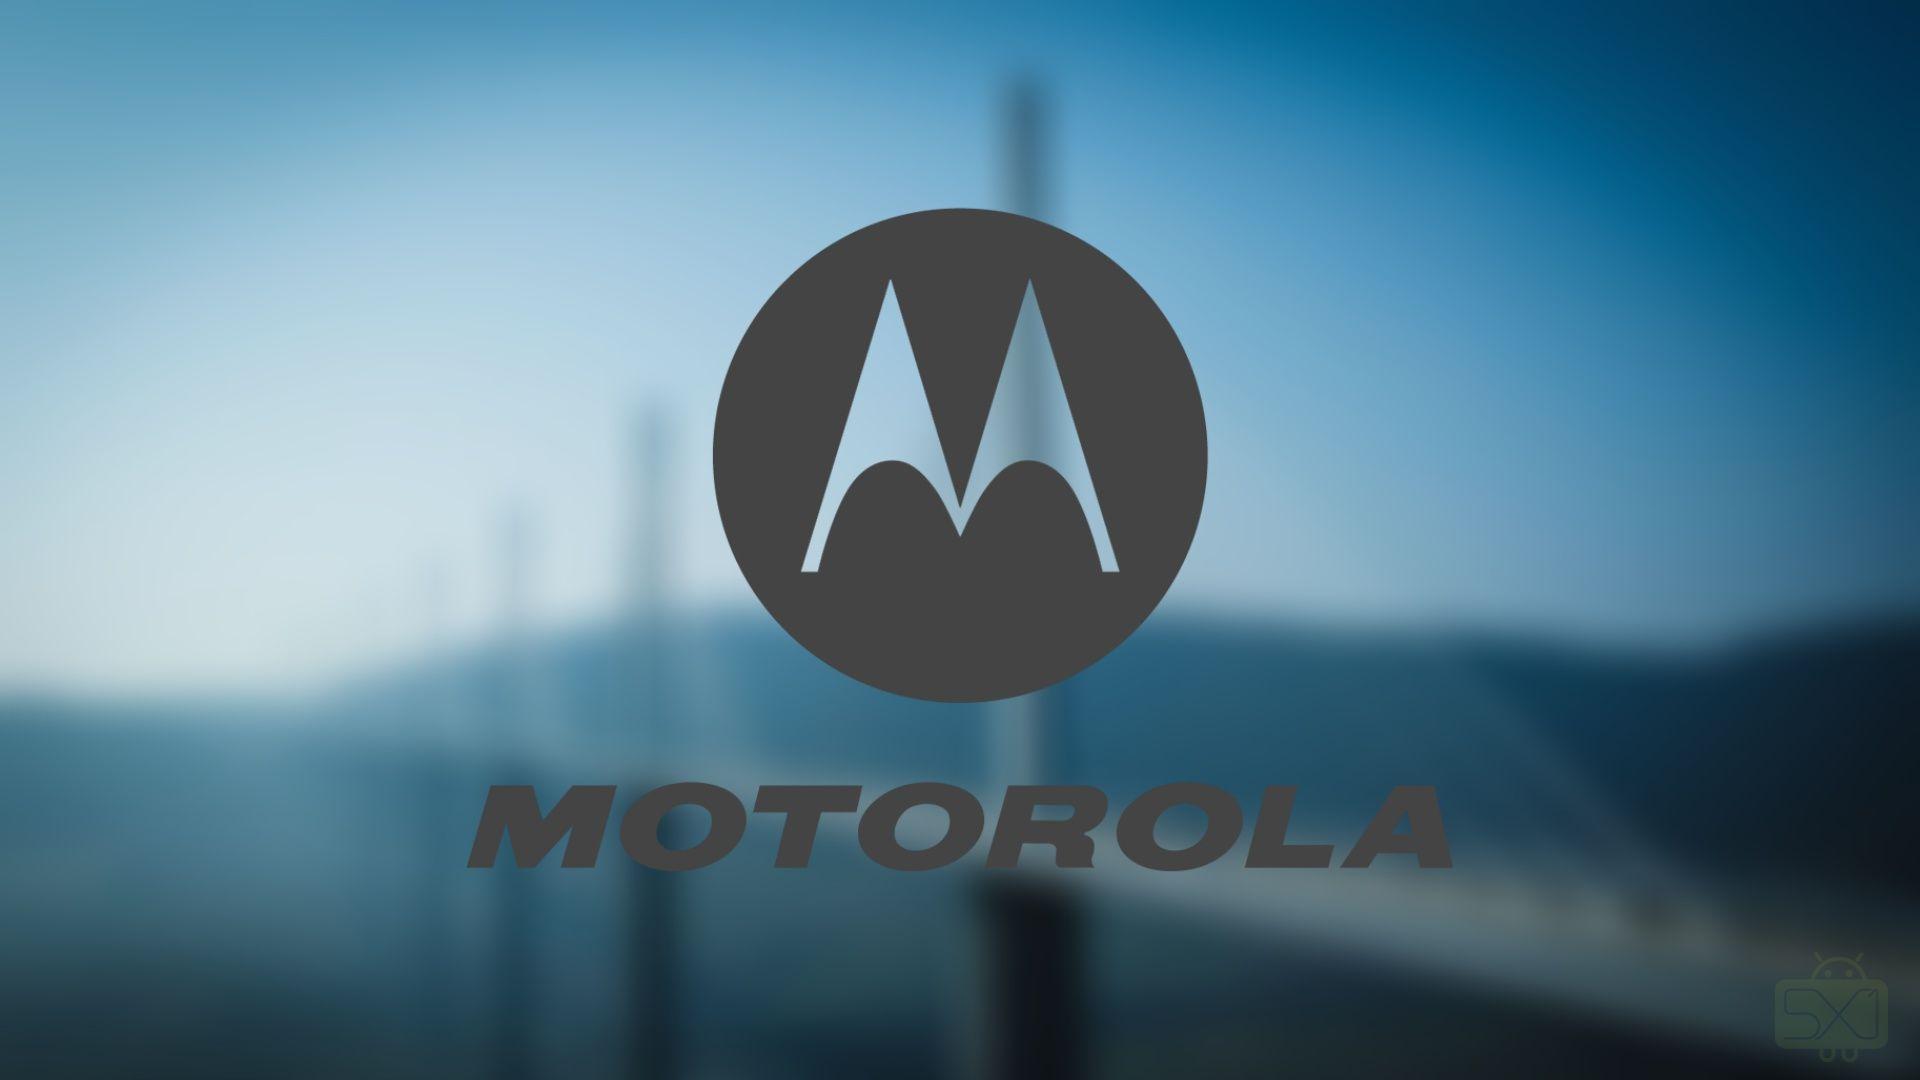 Motorola Home Logo - Motorola P40 specs reveal with Snapdragon 675 & 6GB RAM - Best ...